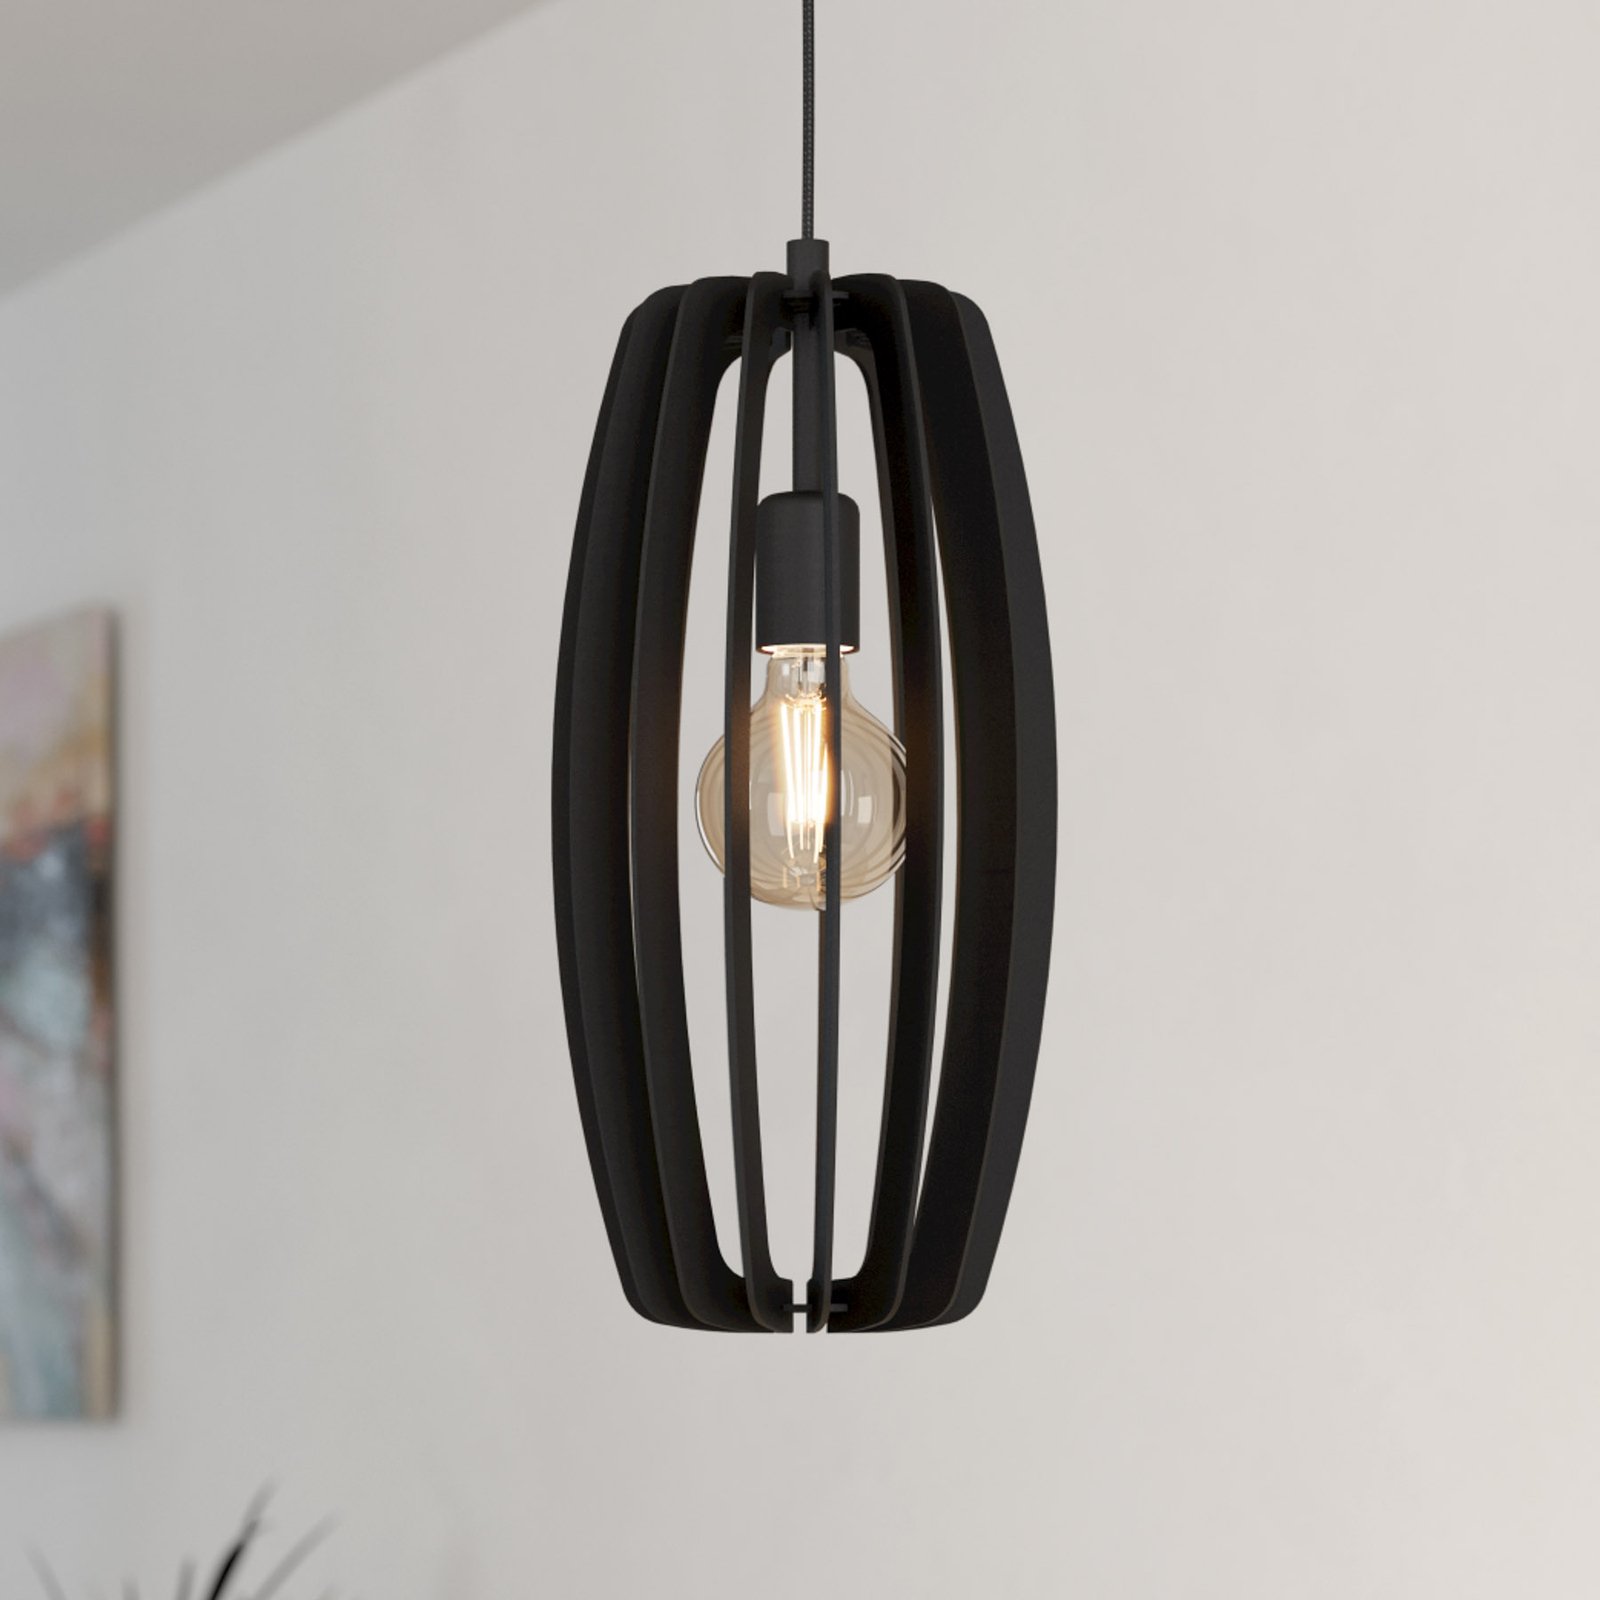 Bajazzara pendant light, one cage shade, black